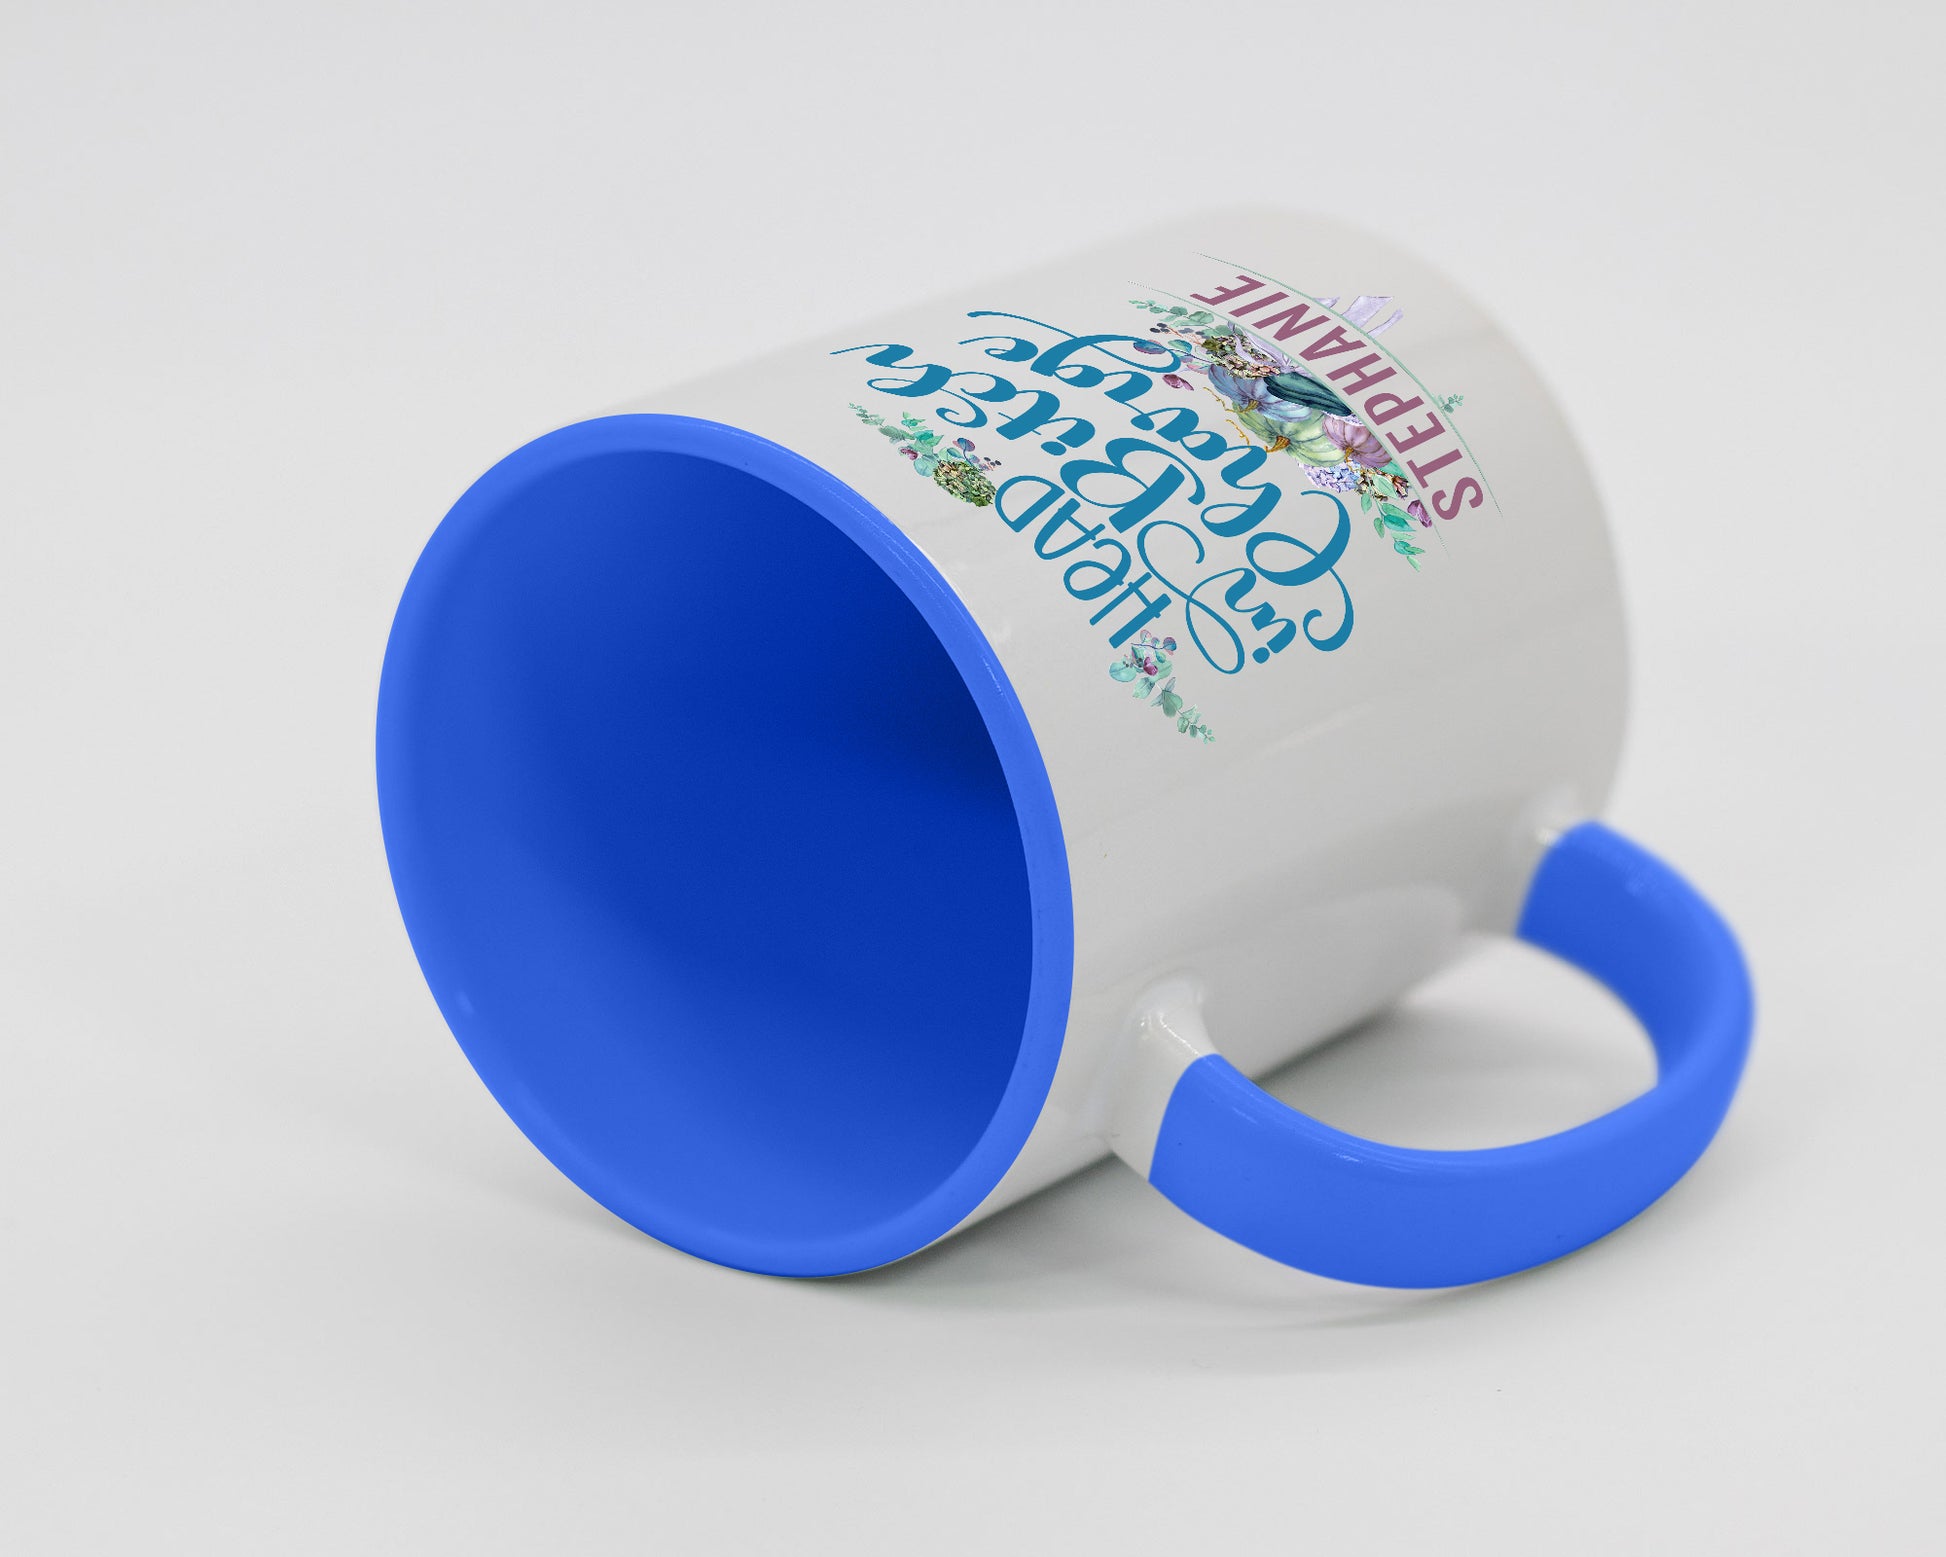 Tea Mug, Graphic Mug, Coffee Mug, Printed Mug, Coffee Cup, Head - Bitch White Coffee Mug With Colored Inside & Handle - Mug Project